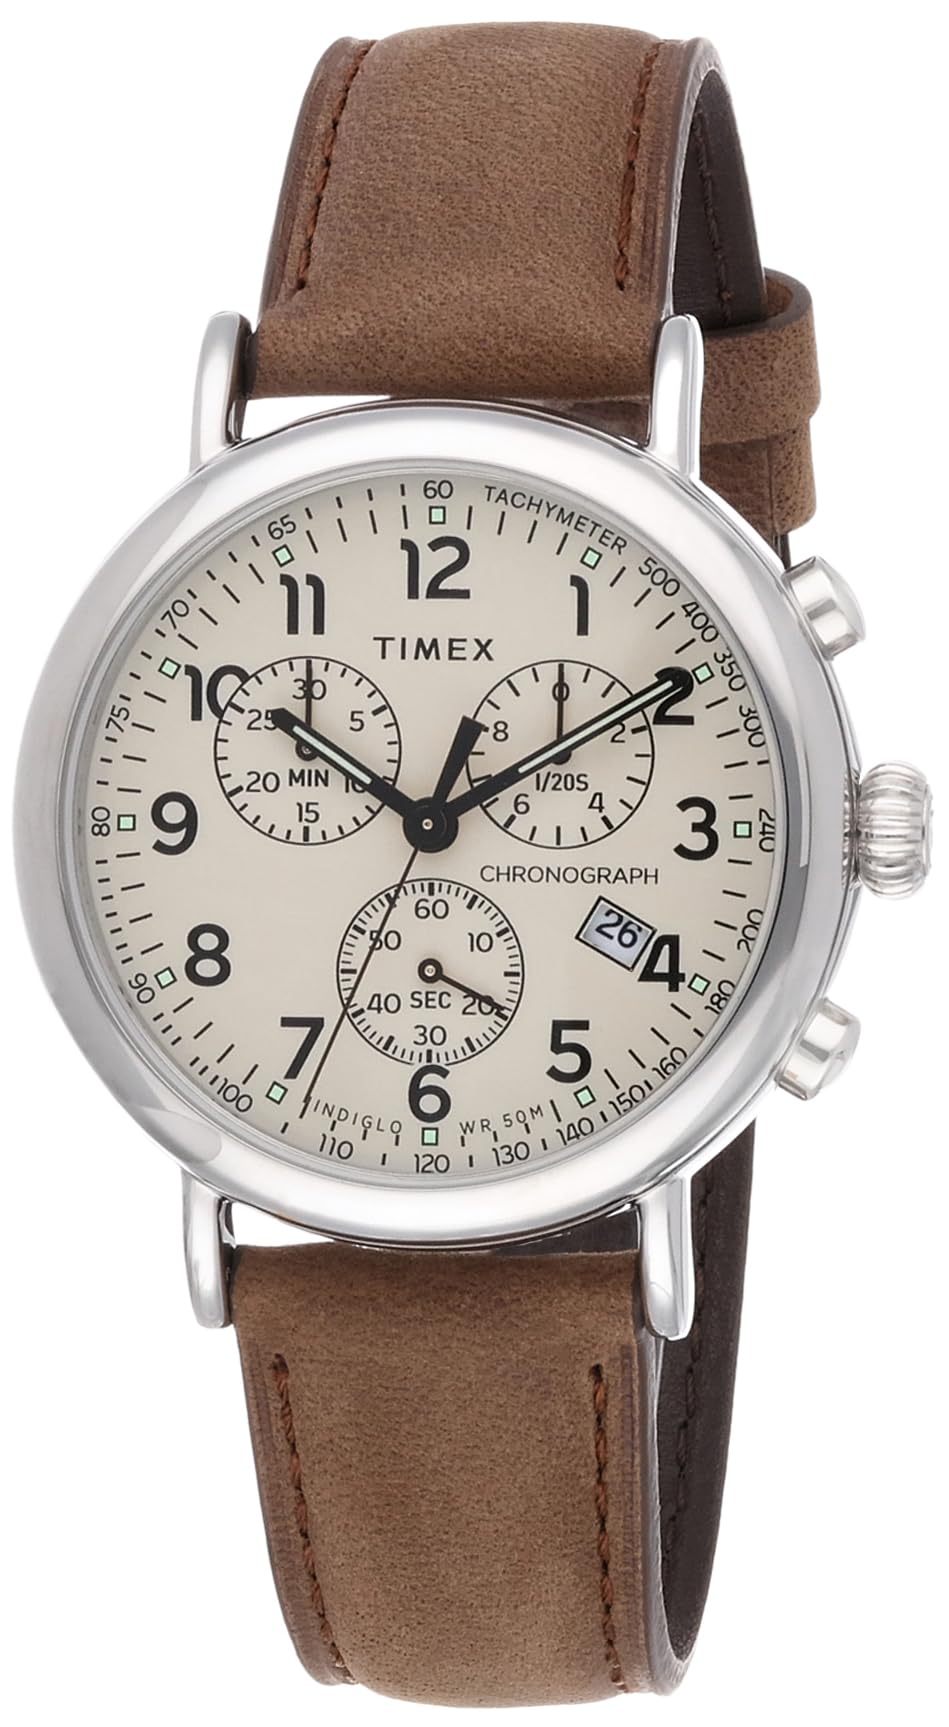 Timex Men's Standard Chronograph Watch